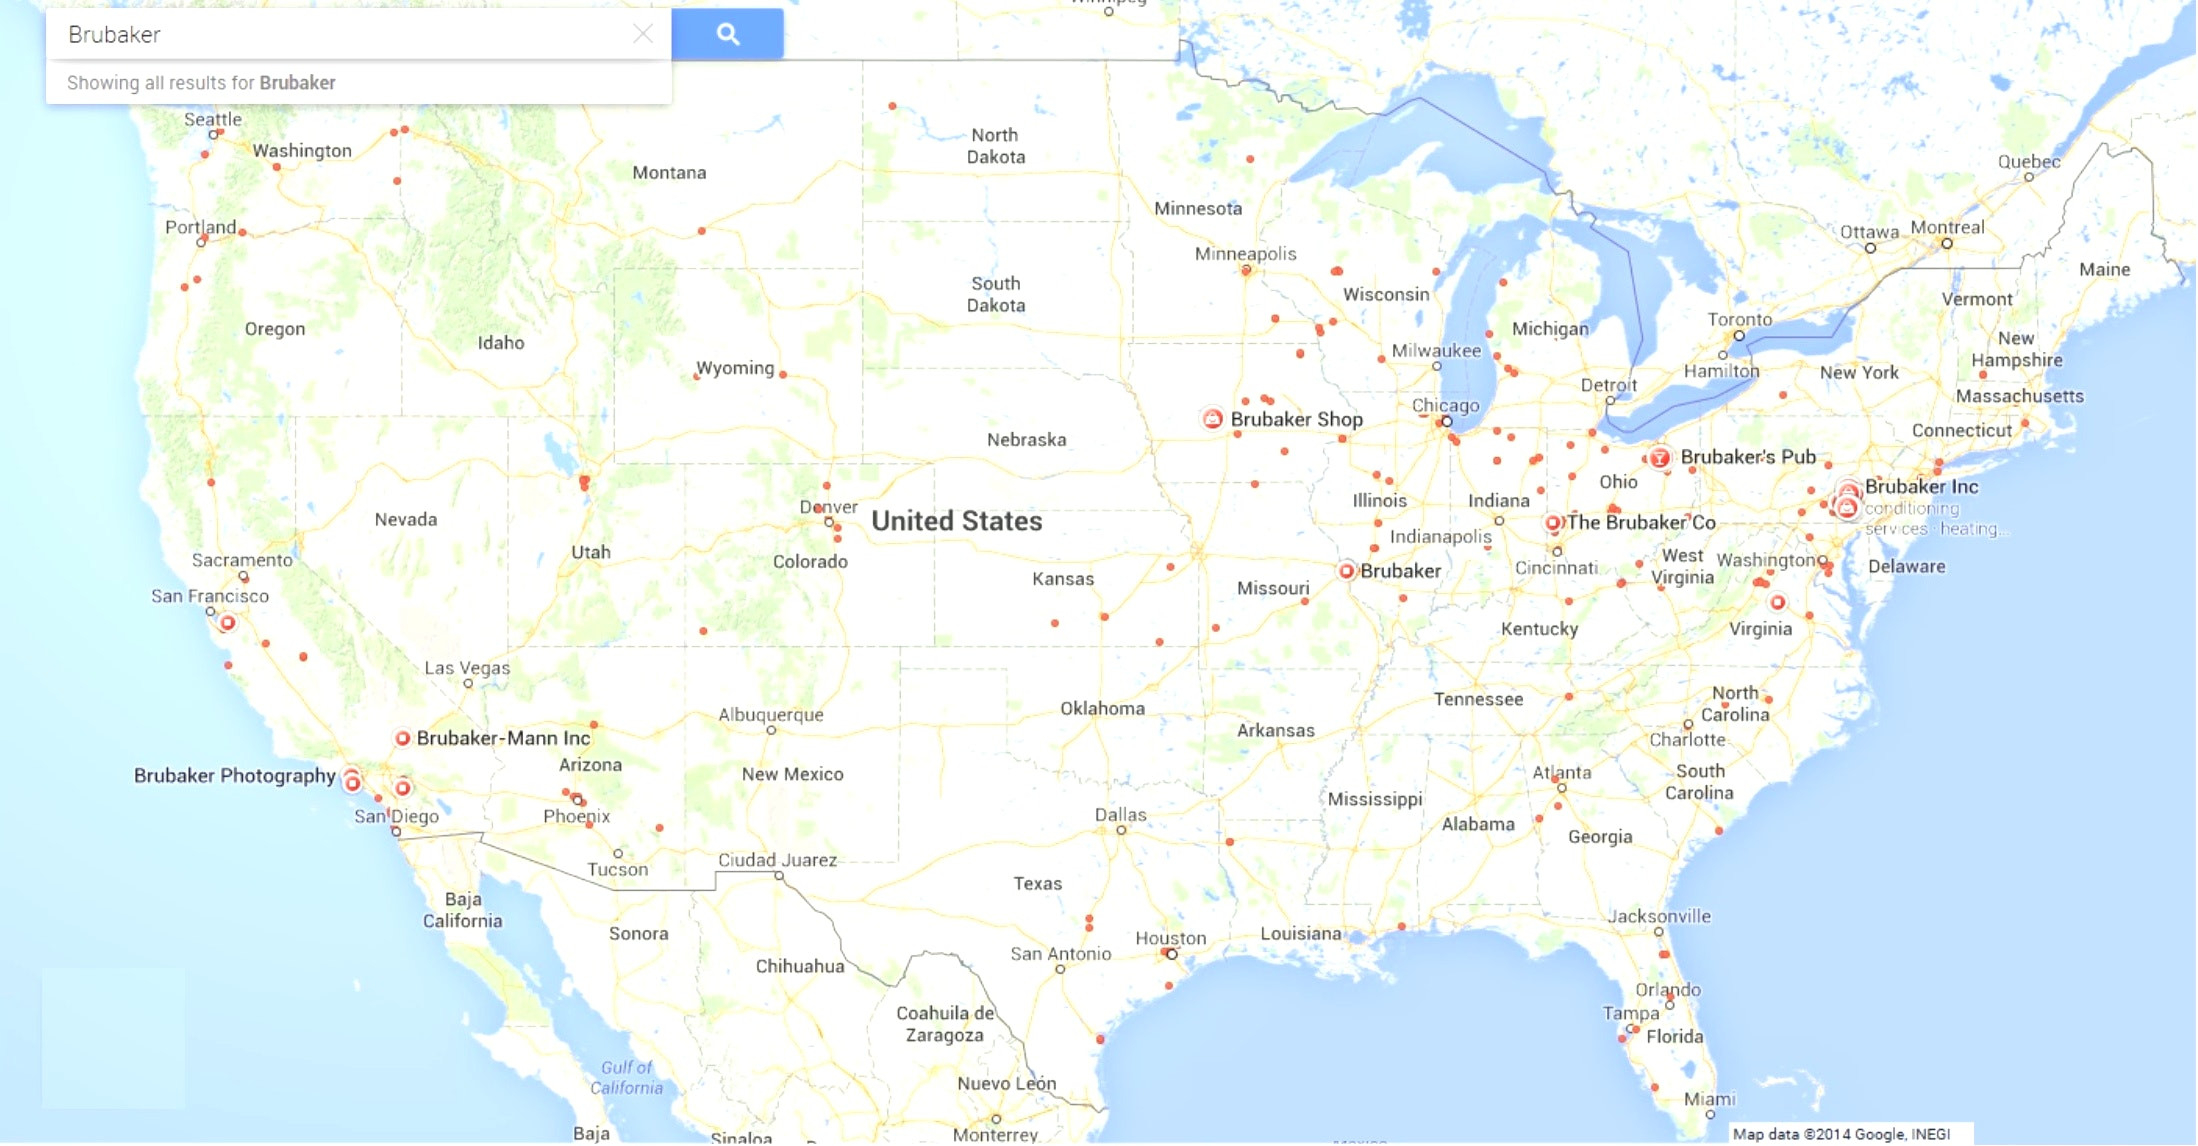 Charming California Google Maps Fresh Maps Usa Midwest - Ettcarworld - Charming California Google Maps